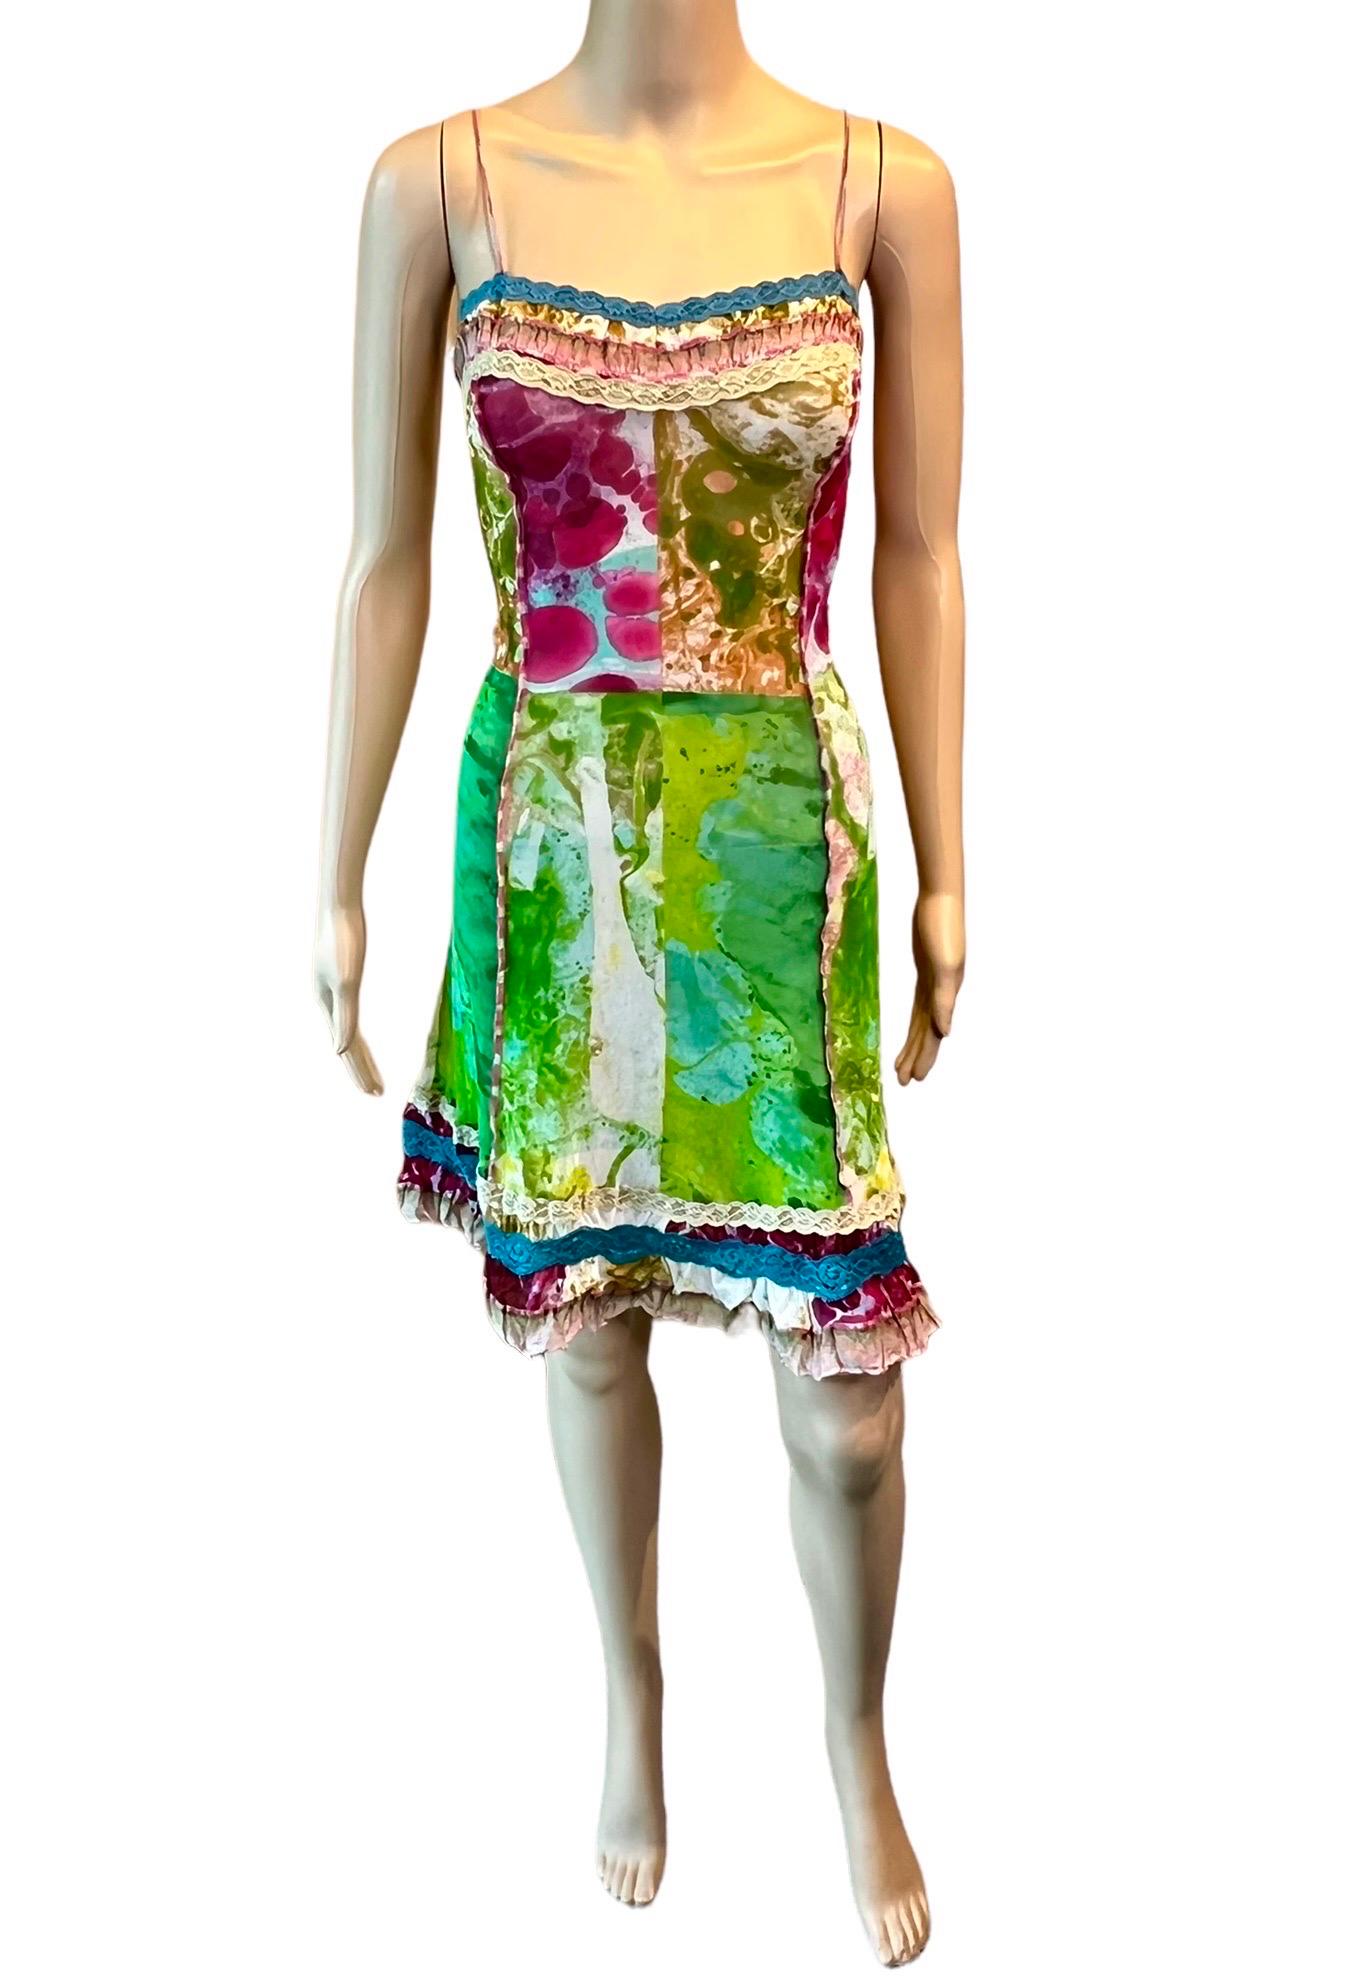 Jean Paul Gaultier S/S 2000 Psychedelic Bacteria Print Sheer Mesh Mini Dress  For Sale 3